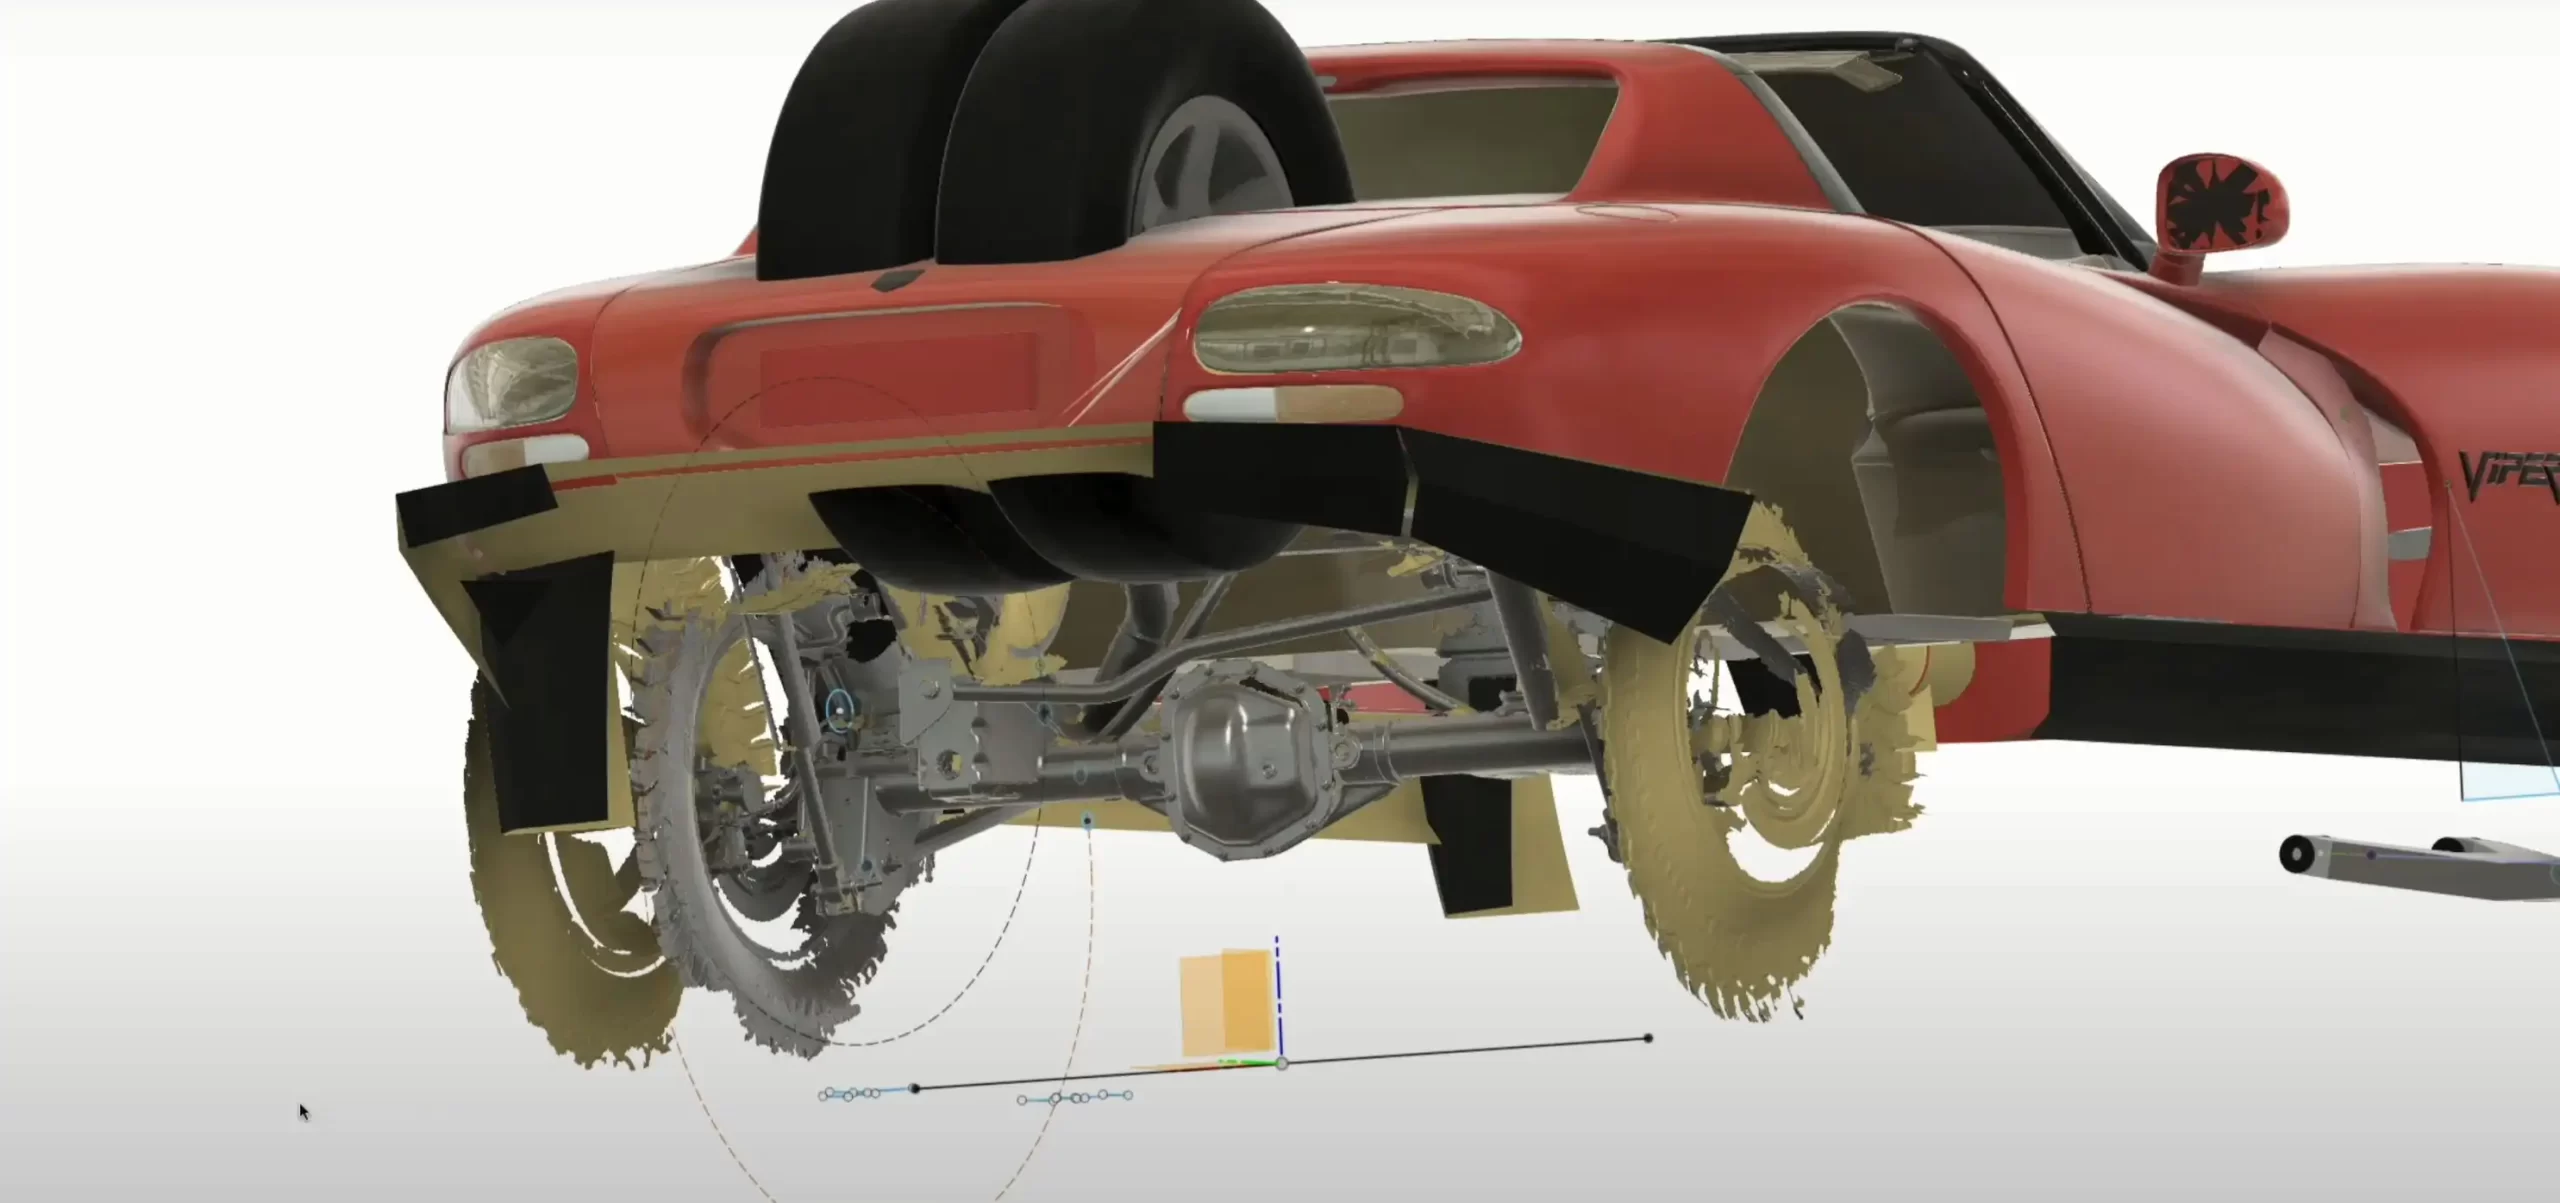 Dodge Viper tout-terrain fou : projet de l'ancien ingénieur de Tesla Matt Brown !